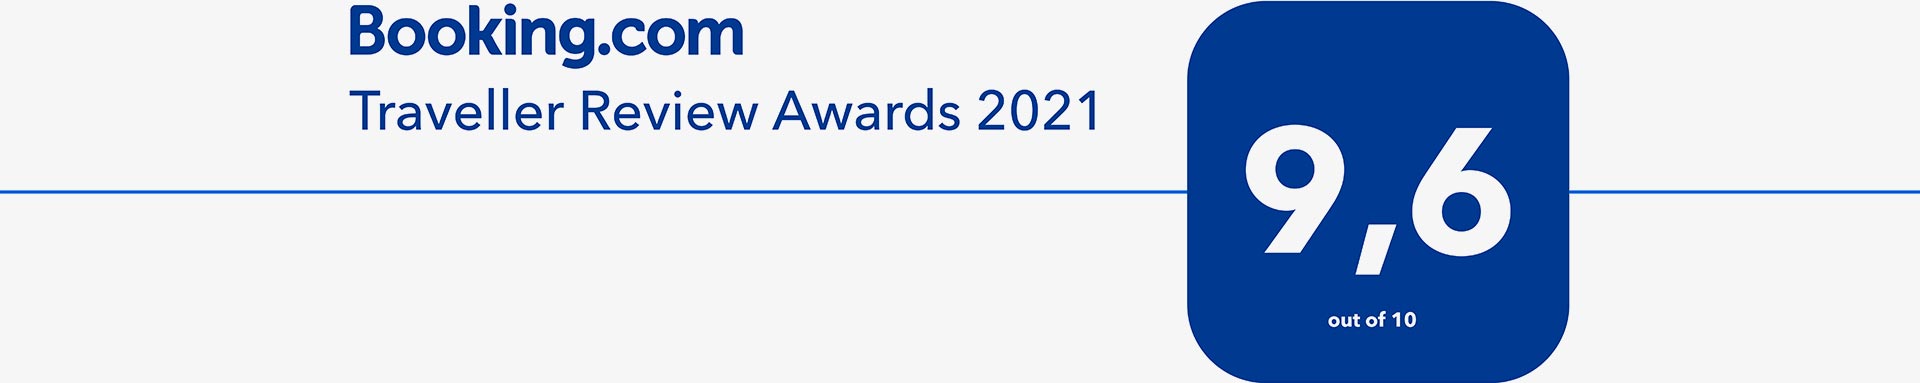 Traveller Review Award 2021 mit 9,7 auf Booking.com